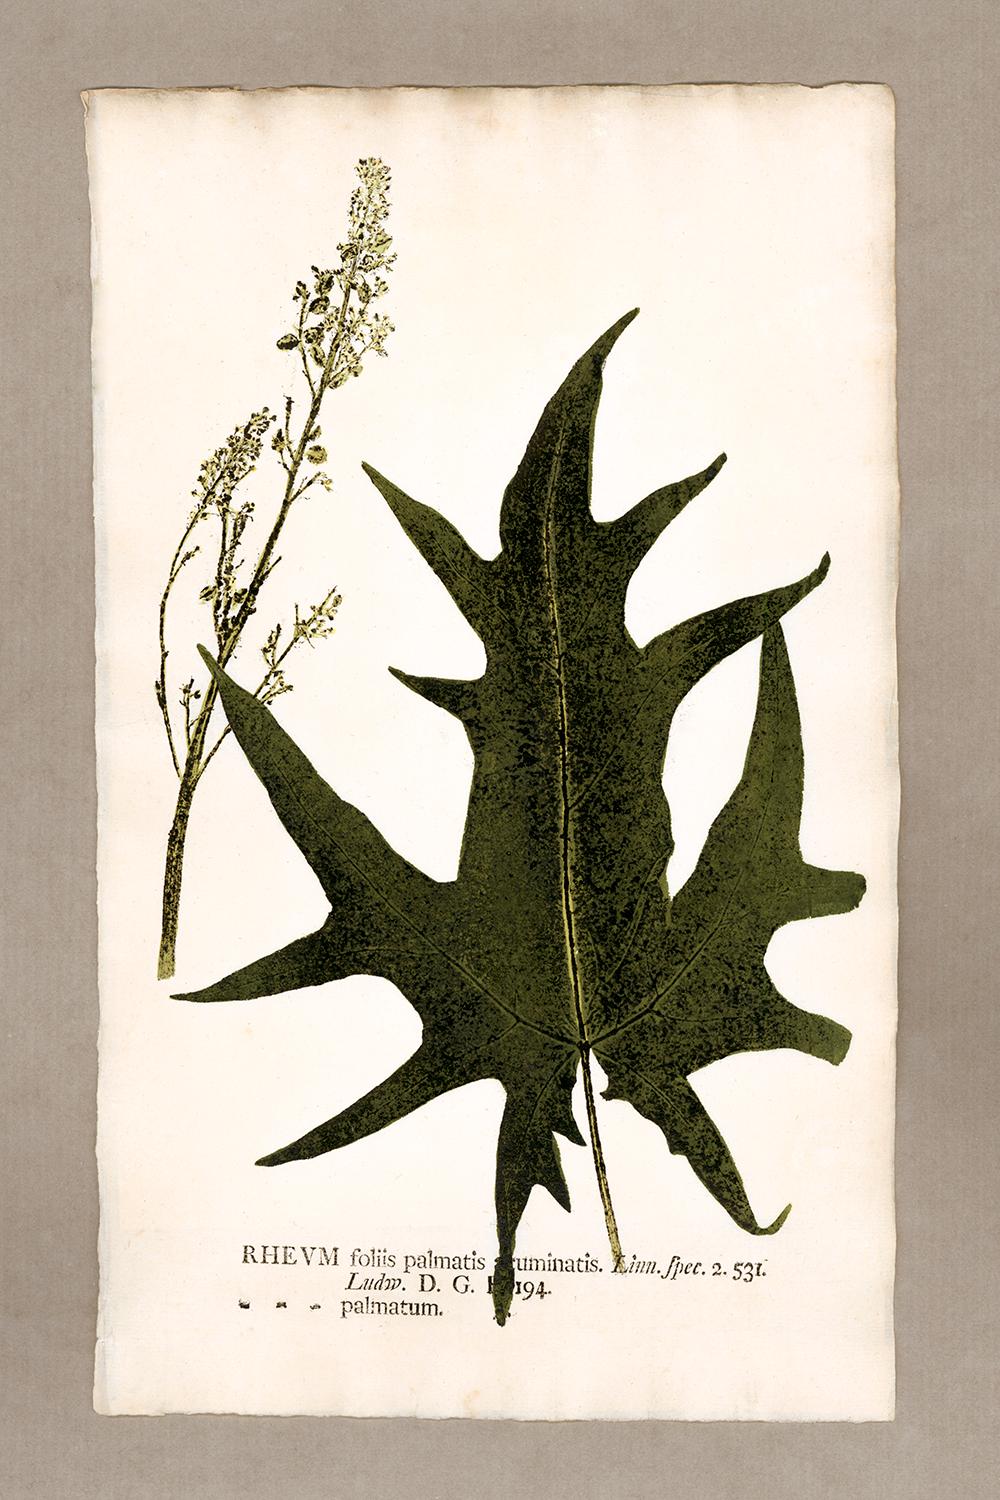 Johann Hieronymus Kniphof  Figurative Print - Botanica in Originali, seu Herbarium Vivum - "Nature Printed Plants" -5